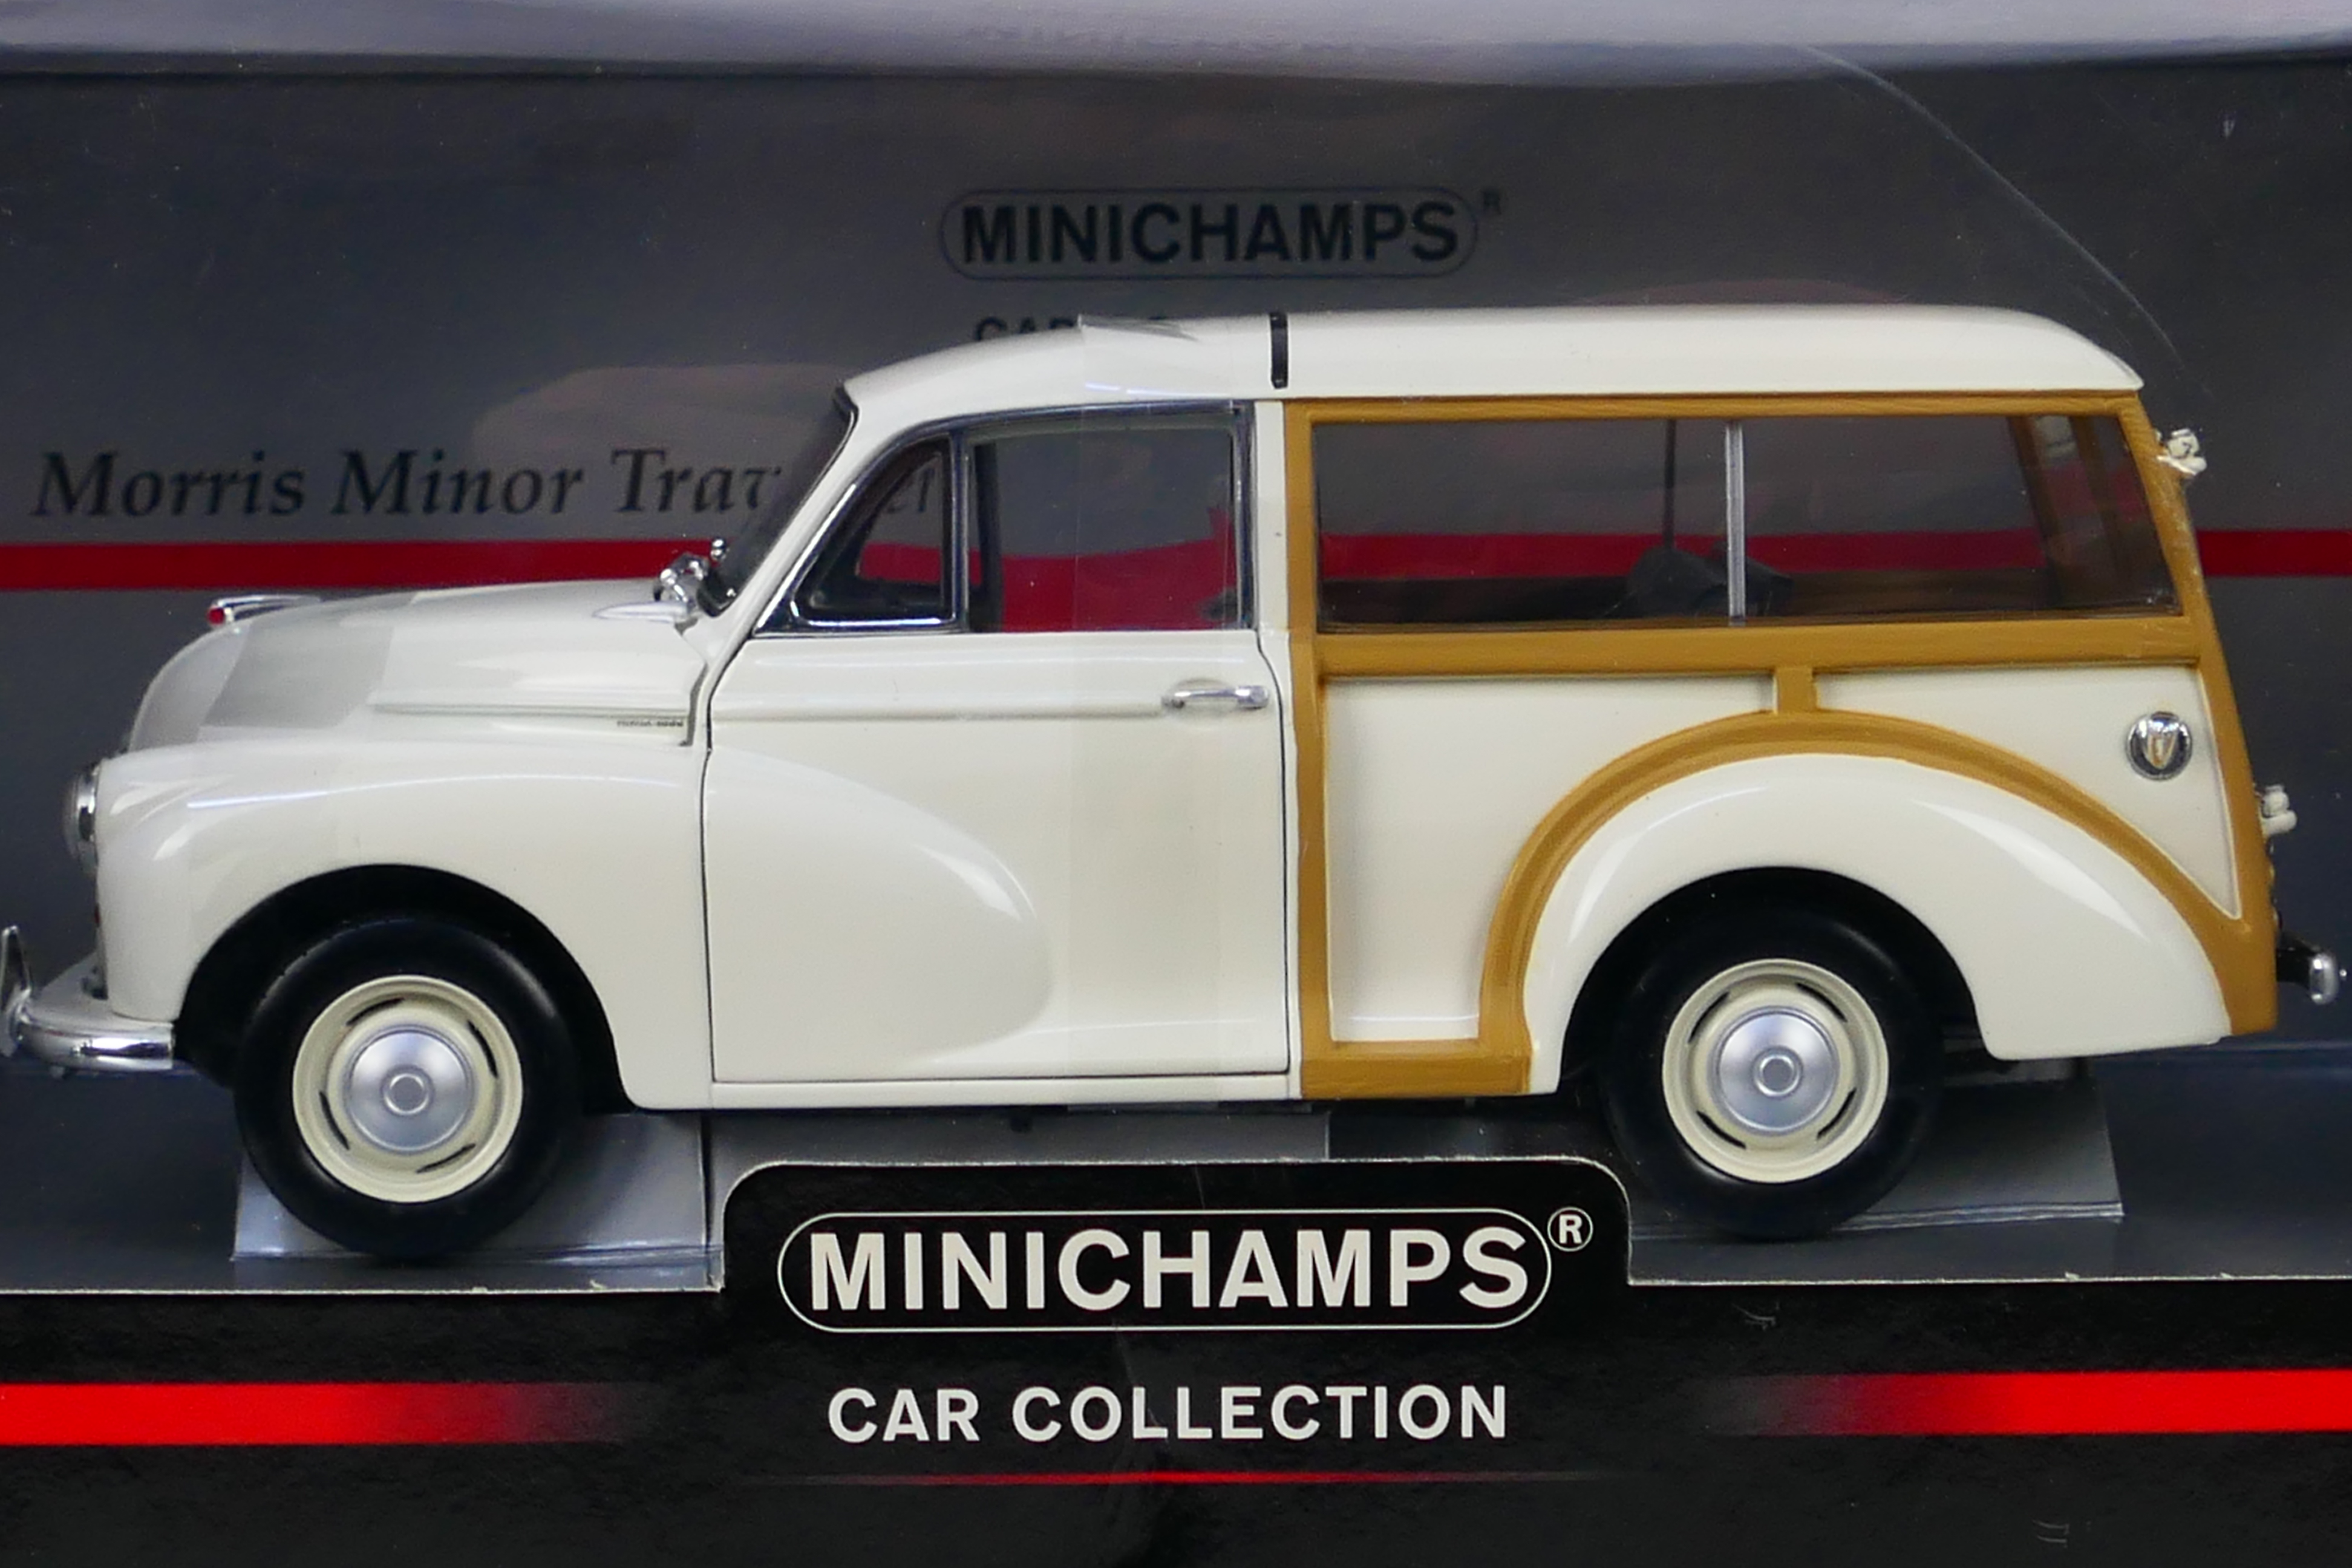 Minichamps - A boxed Minichamps 'Car Collection' #150137010 1:18 scale Morris Minor Traveller. - Image 2 of 3